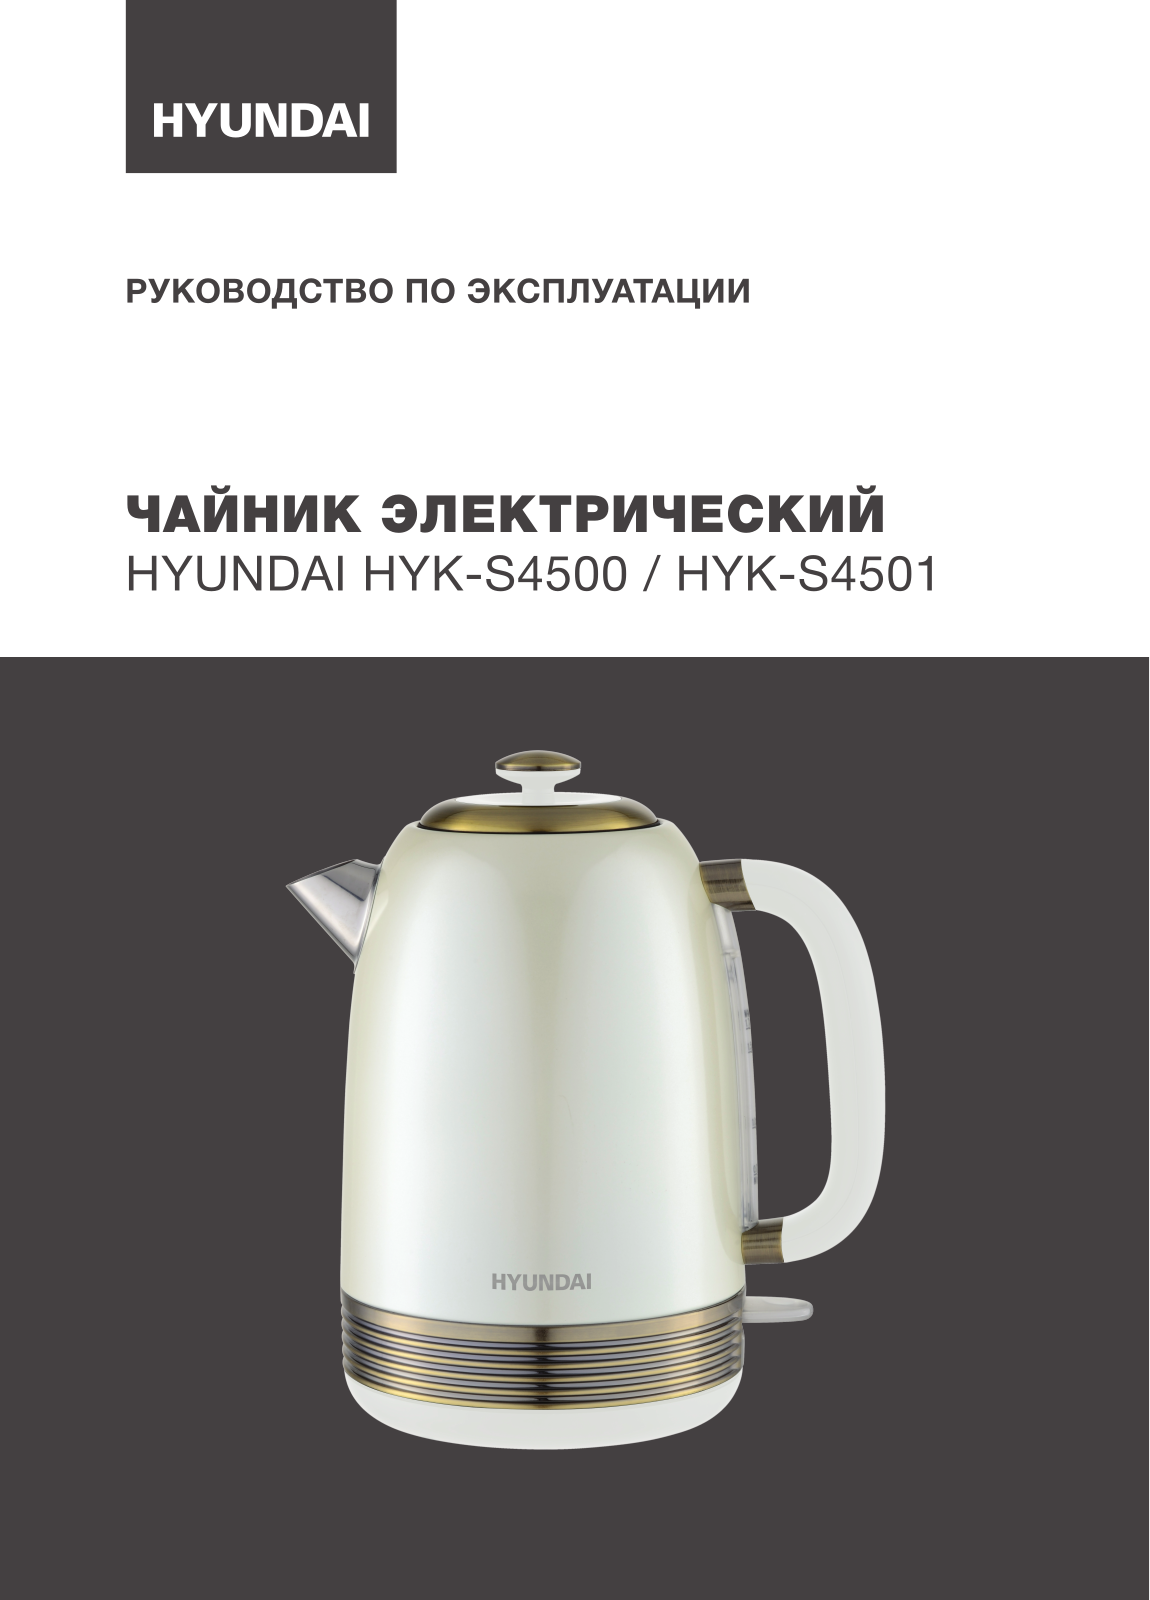 Hyundai HYK-S4500 User Manual